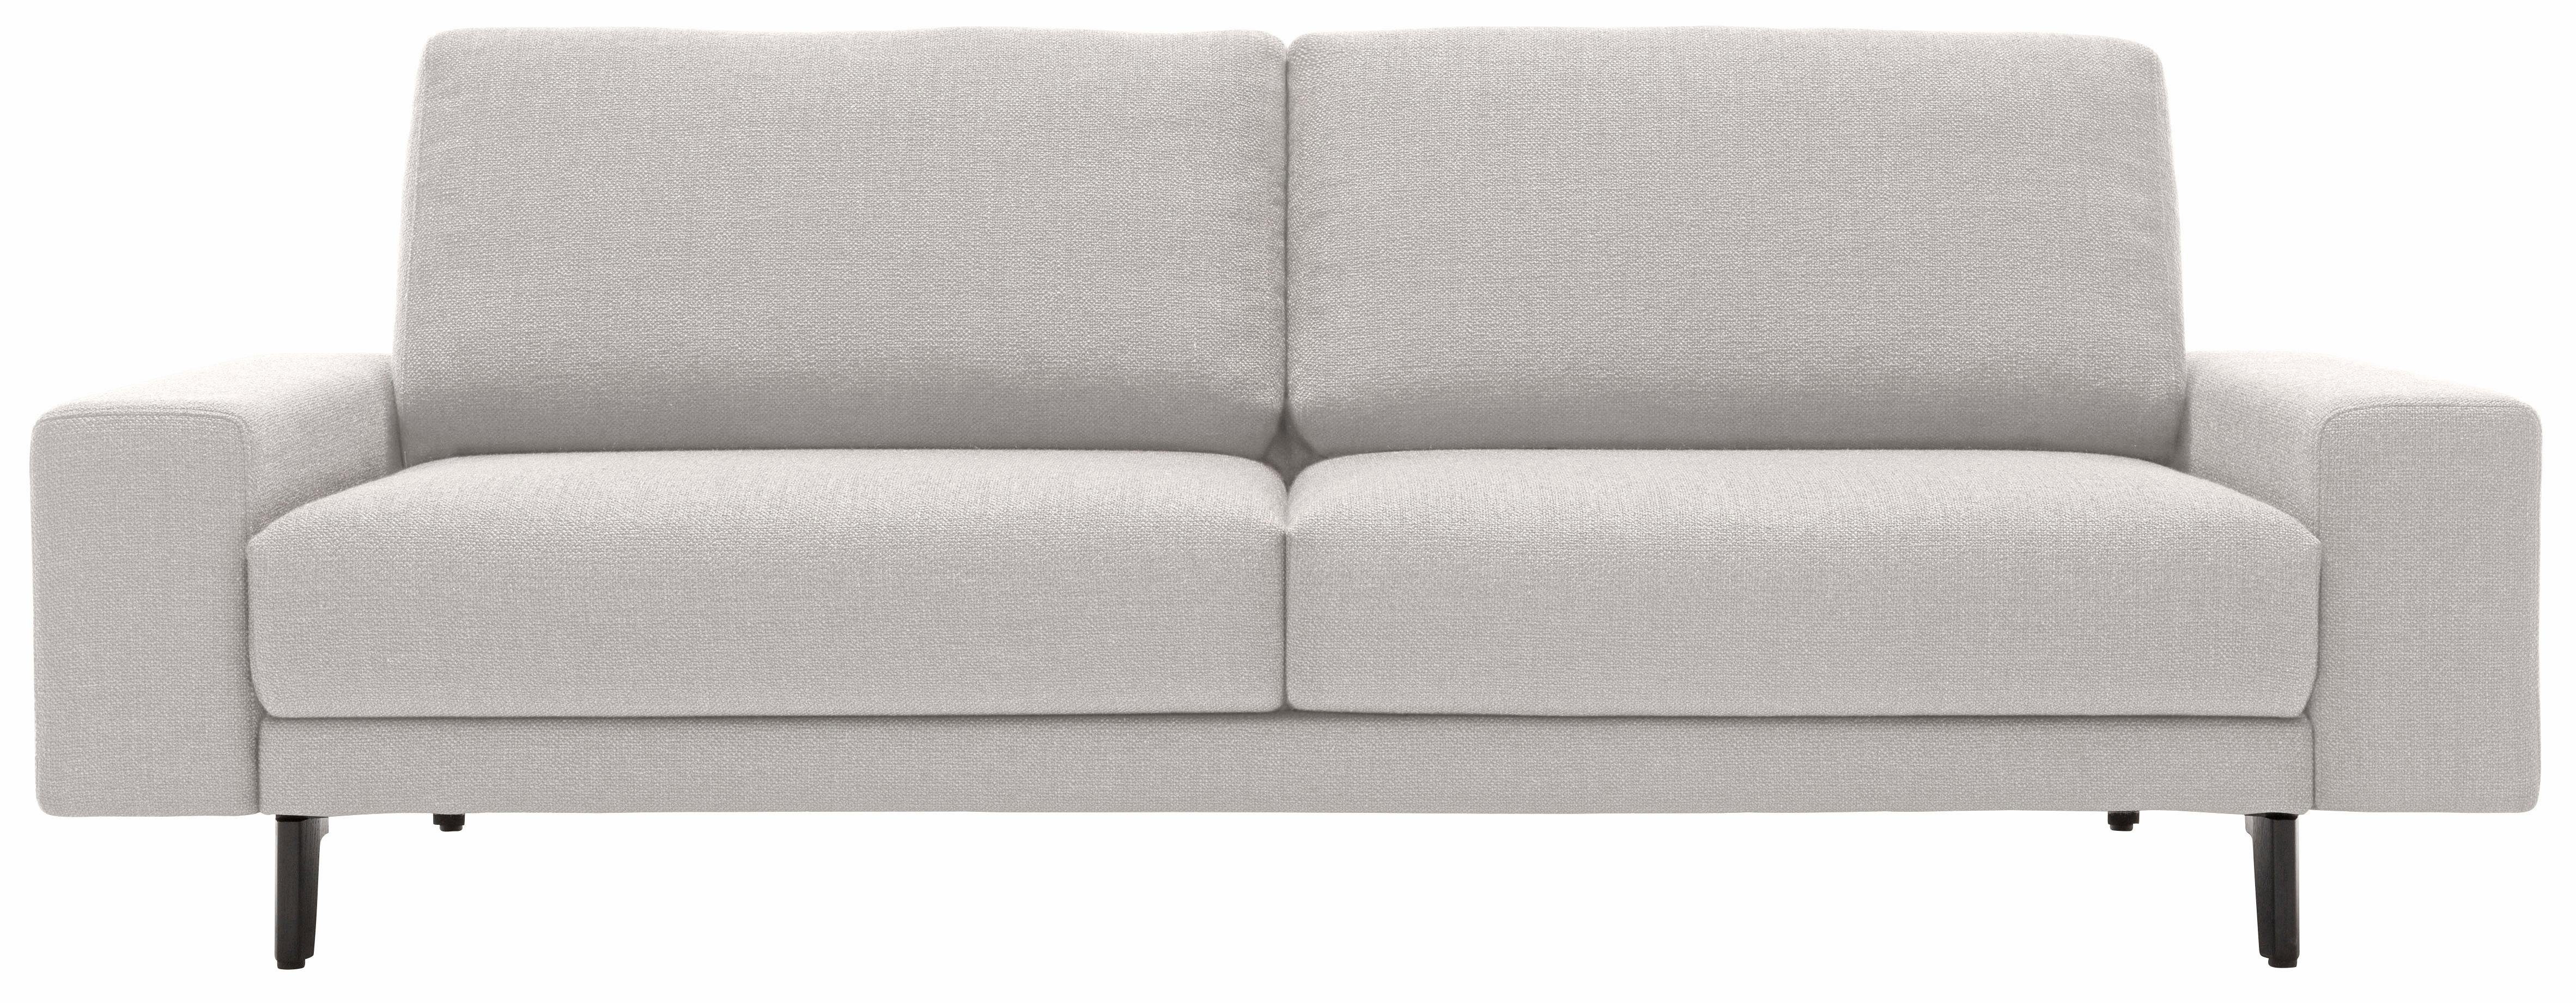 cm in 2-Sitzer Alugussfüße sofa niedrig, Armlehne hs.450, hülsta Breite 180 umbragrau, breit